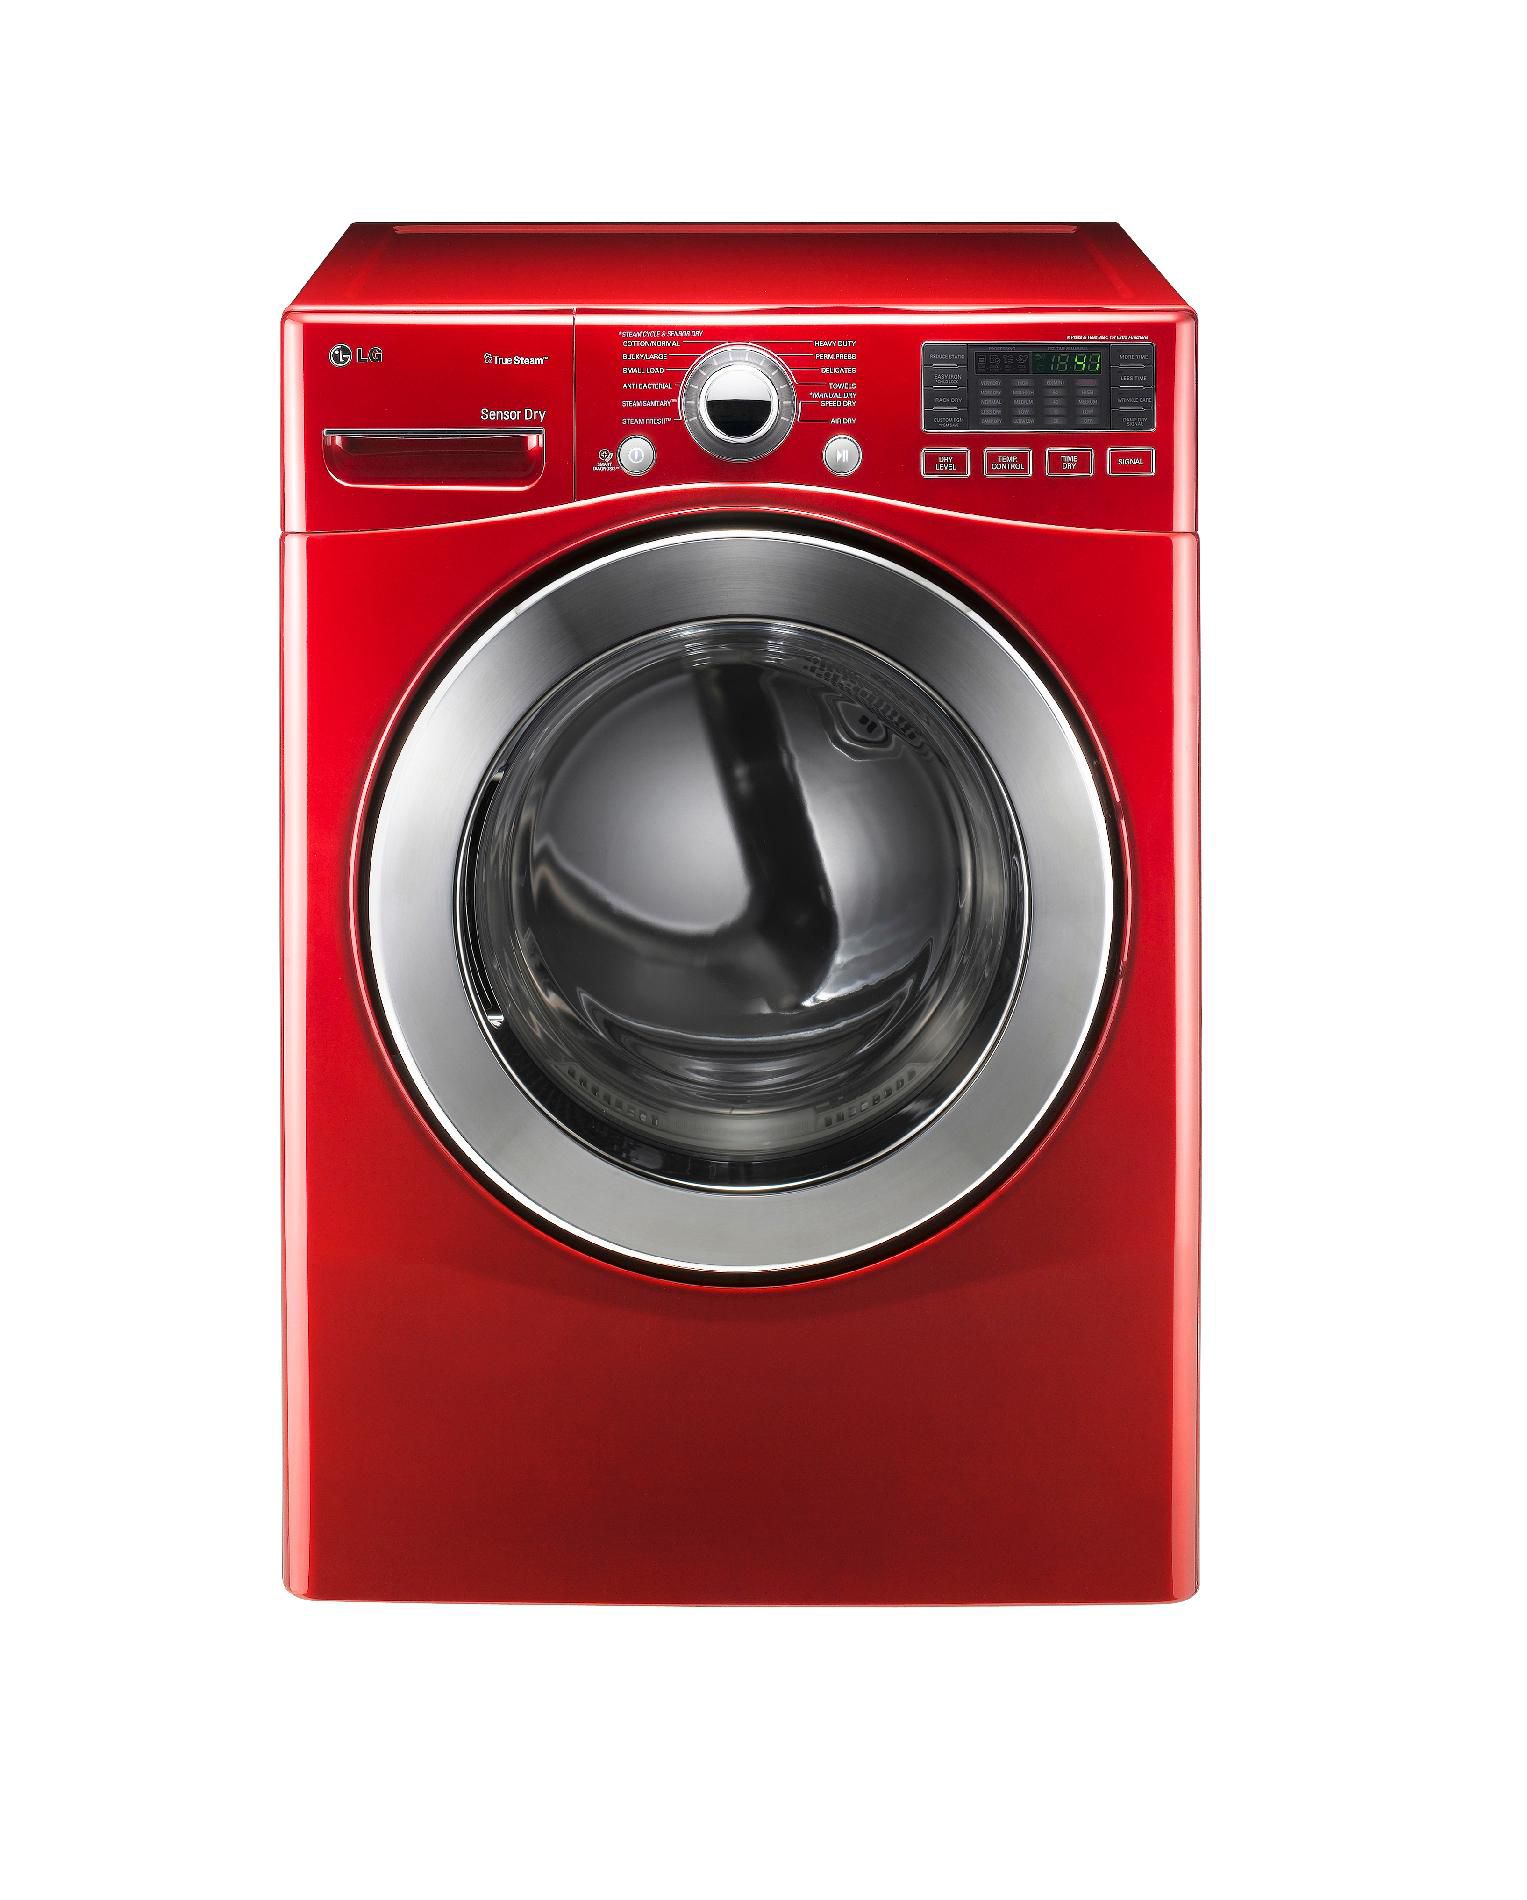 LG 7.3 cu. ft. Steam Gas Dryer w/ Sensor Dry - Red